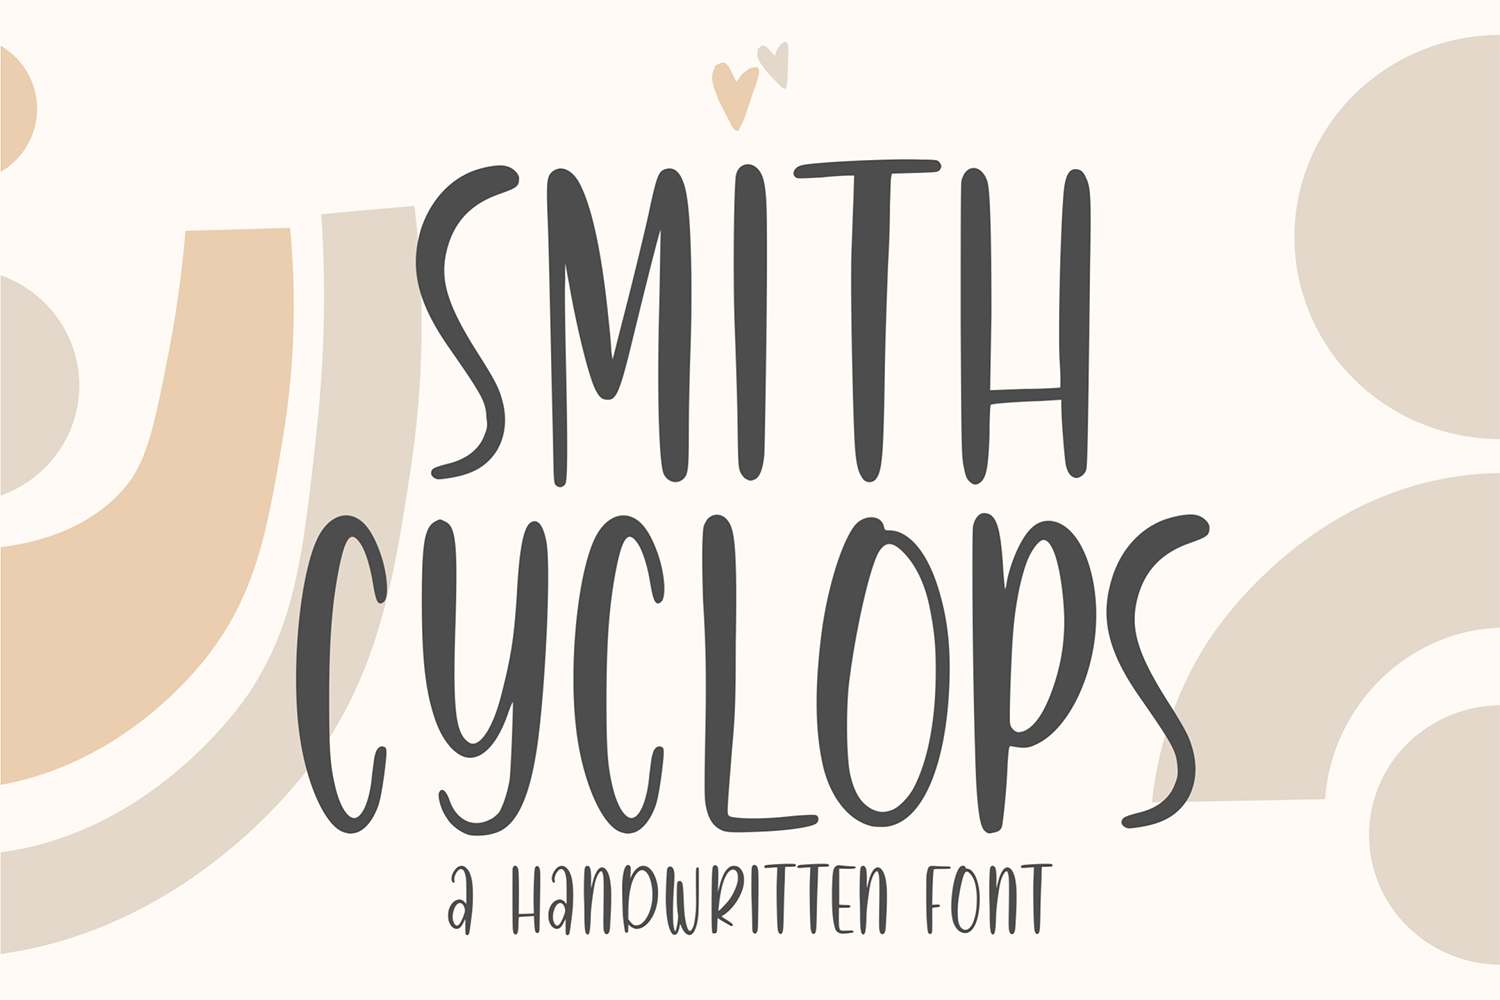 Smith Cyclops Free Font